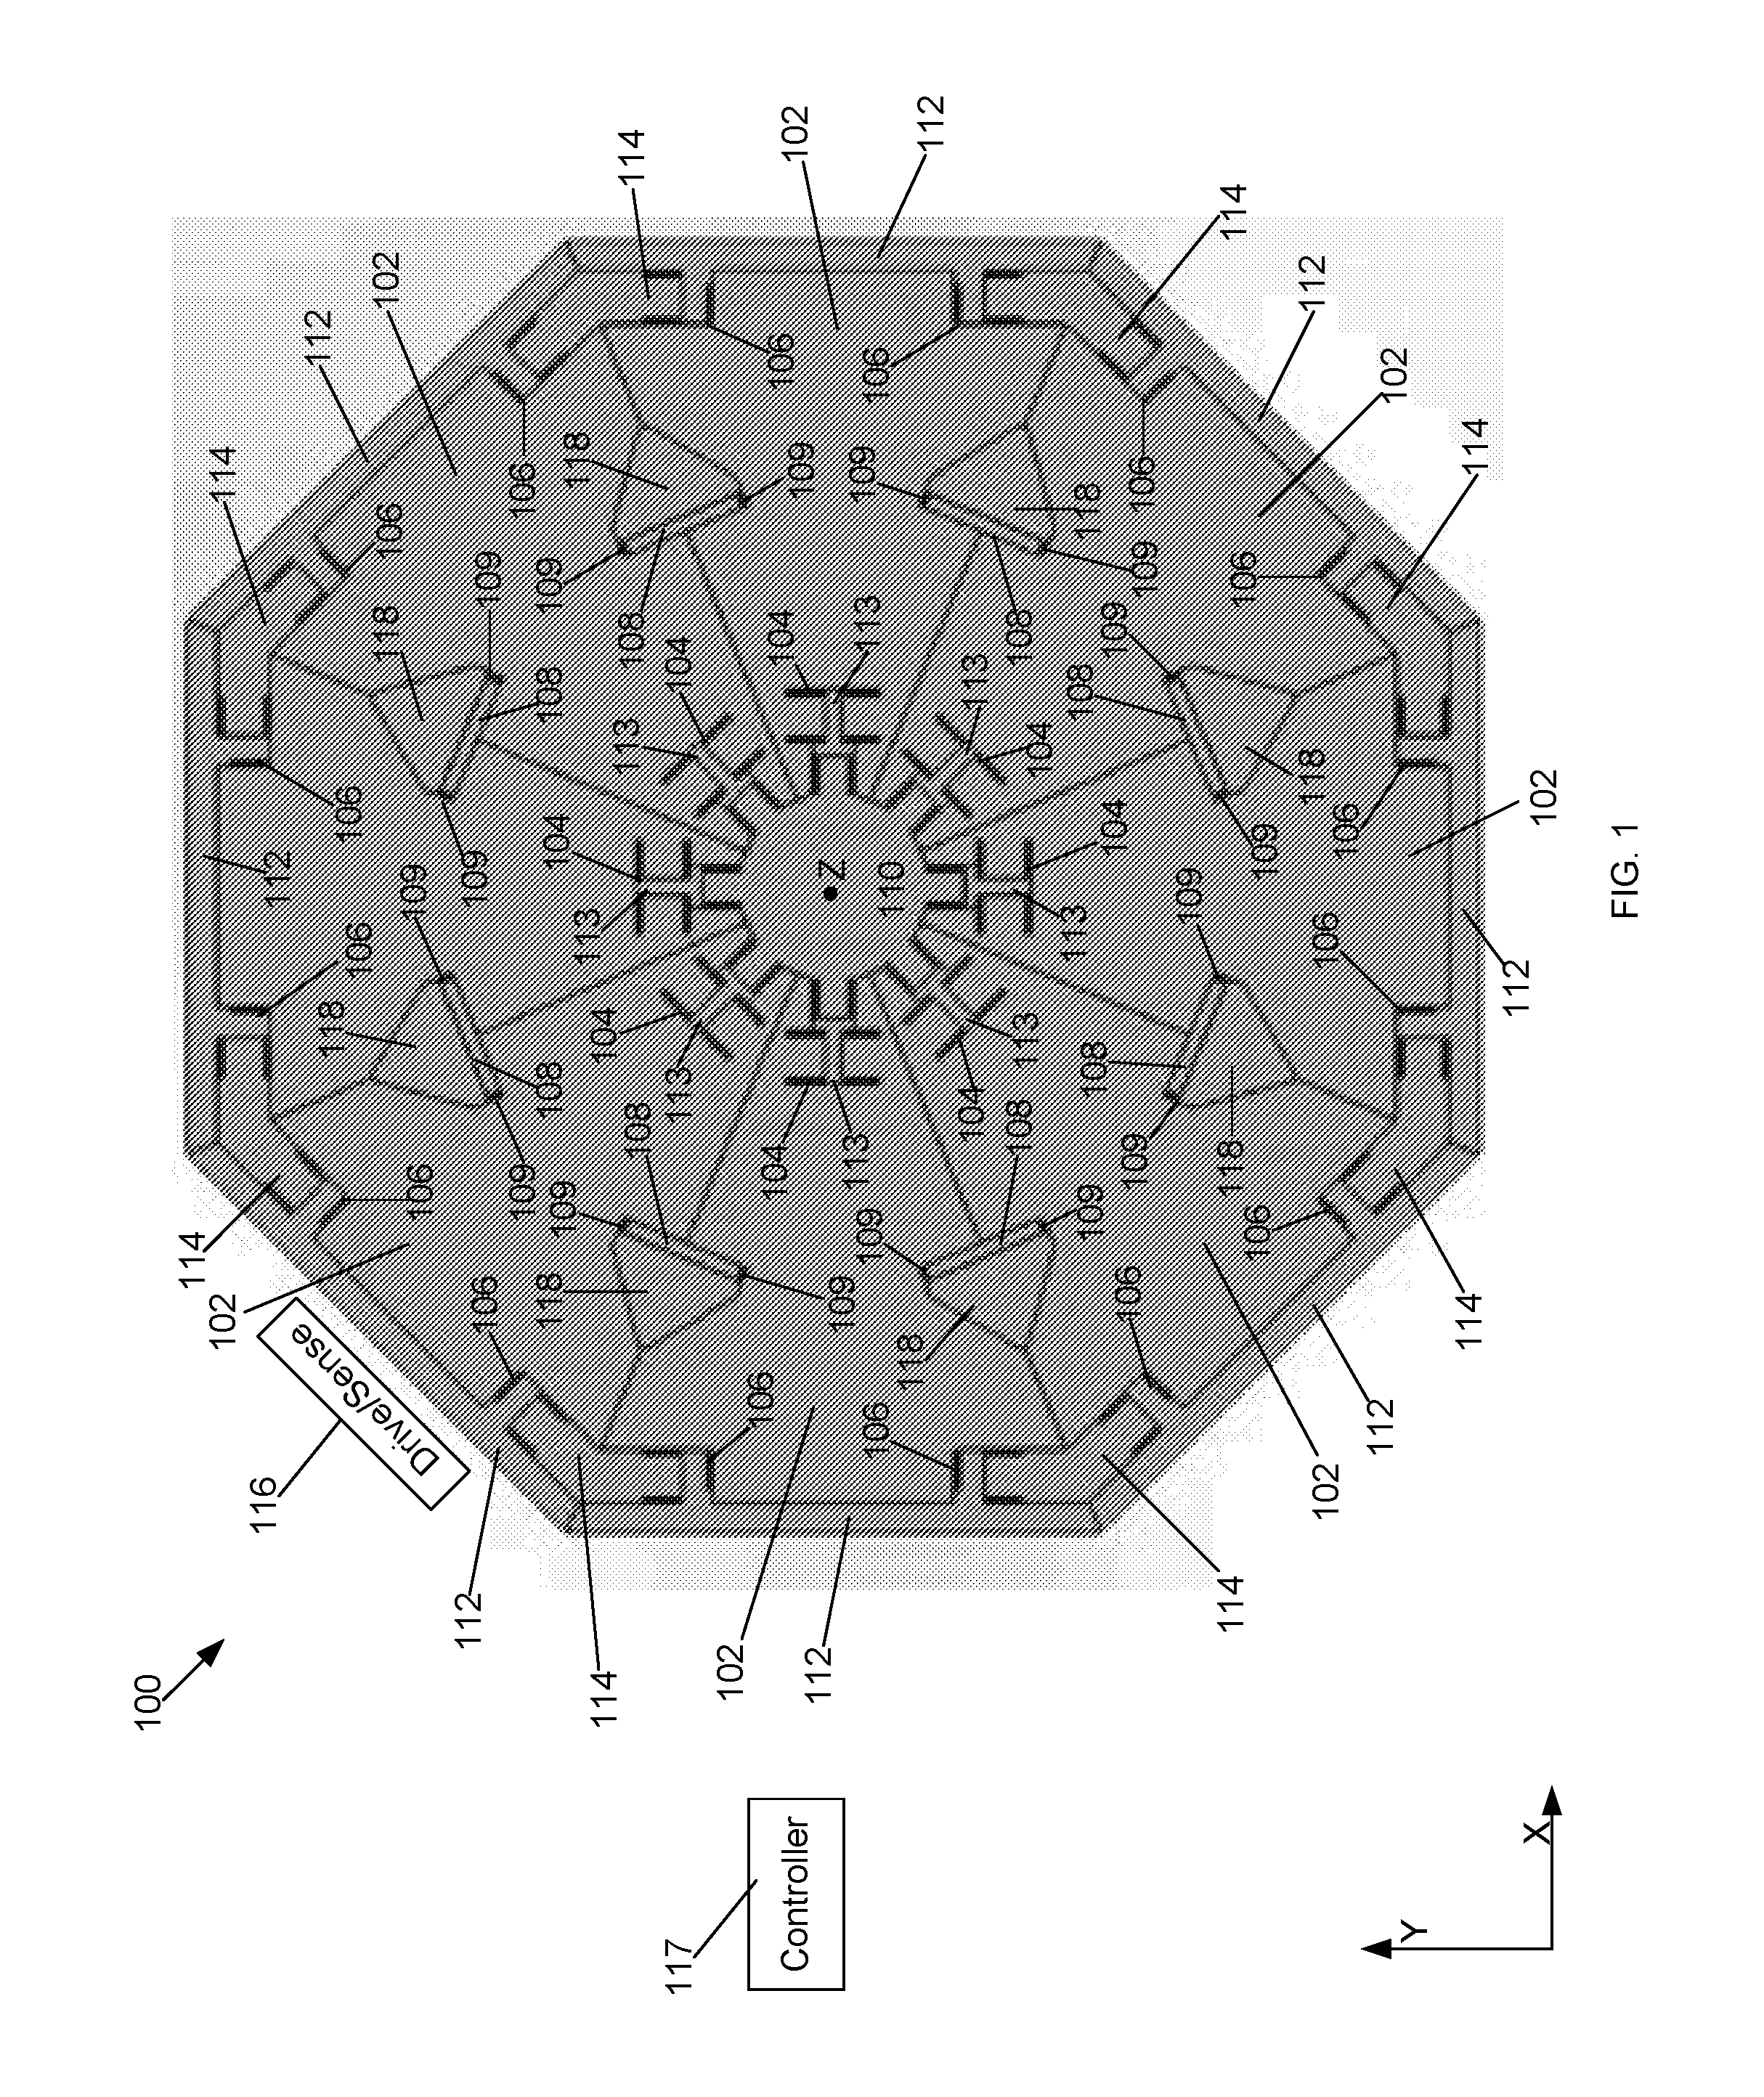 Whole angle MEMS gyroscope on hexagonal crystal substrate